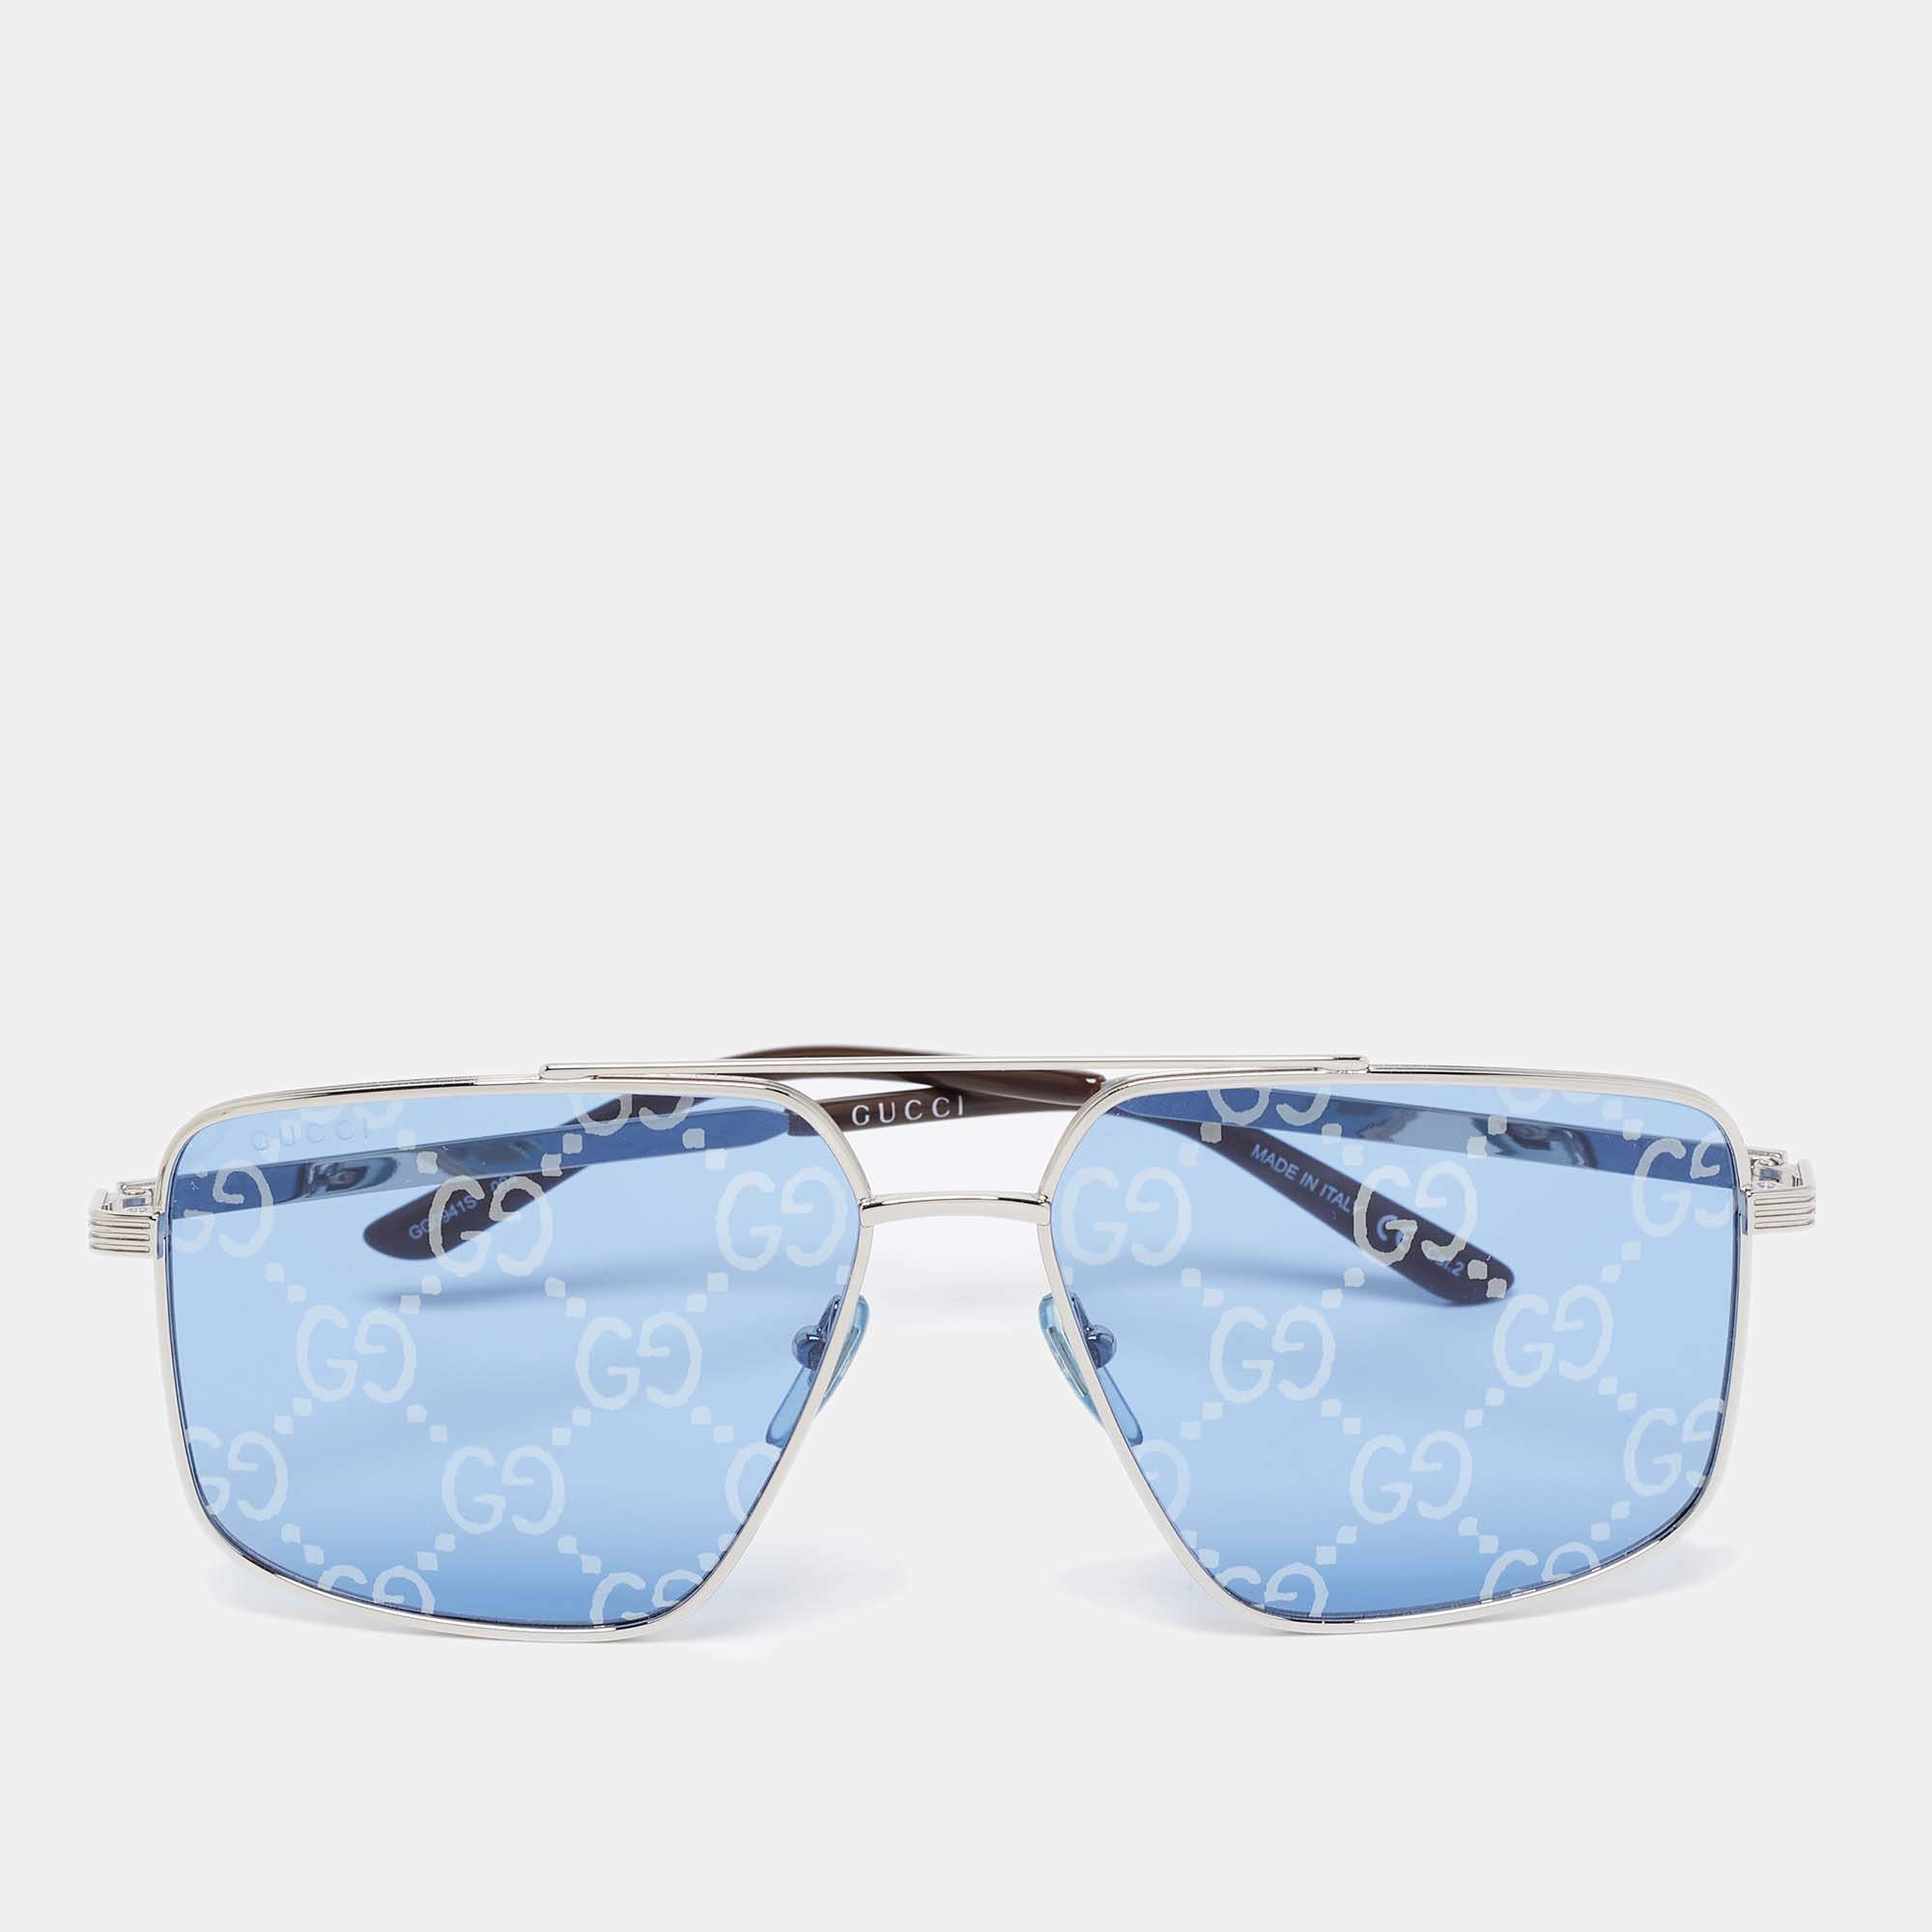 Gucci Sunglasses Gg1189s 墨镜355.00 超值好货| 北美省钱快报